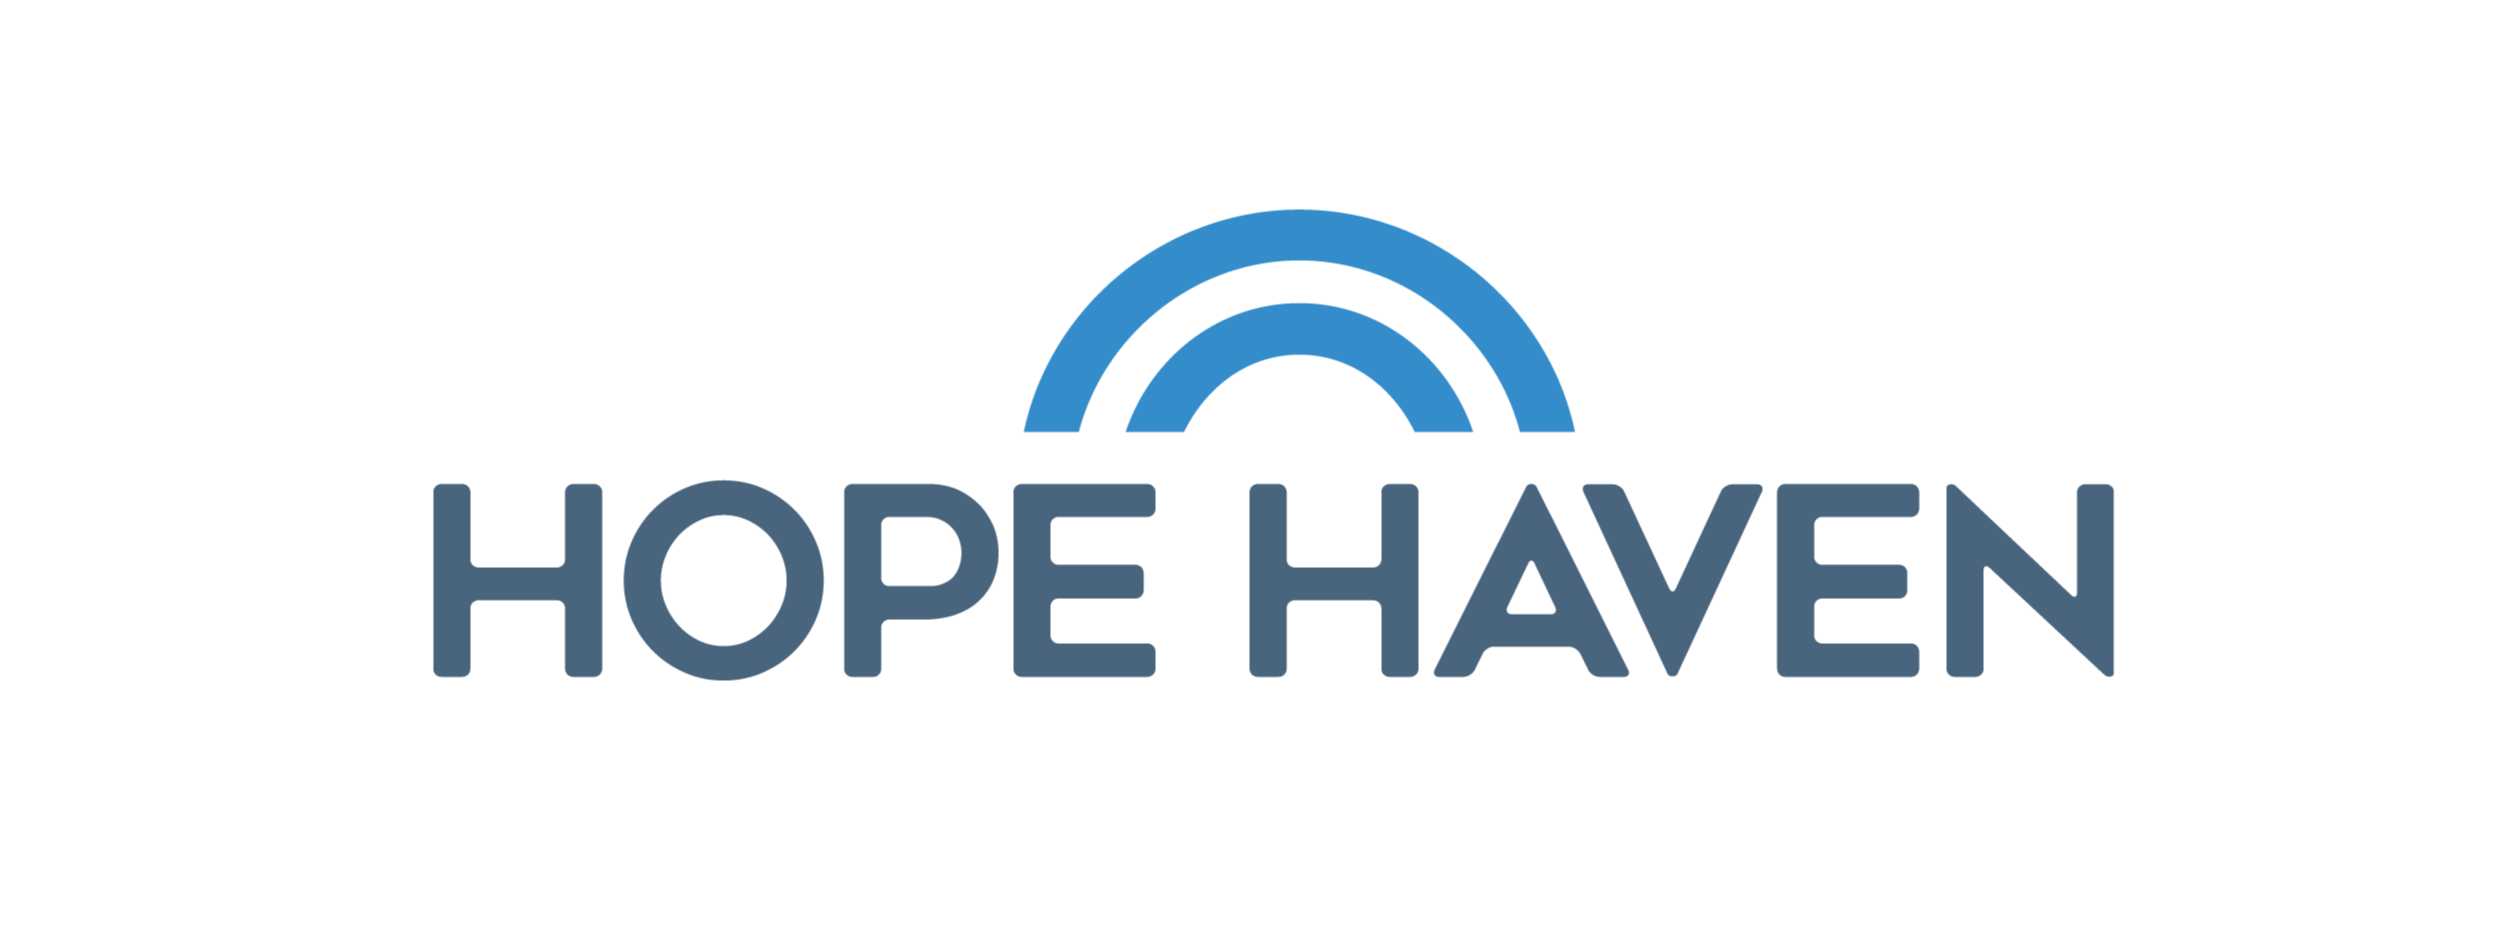 Hope-Haven_Social-Post-06-2